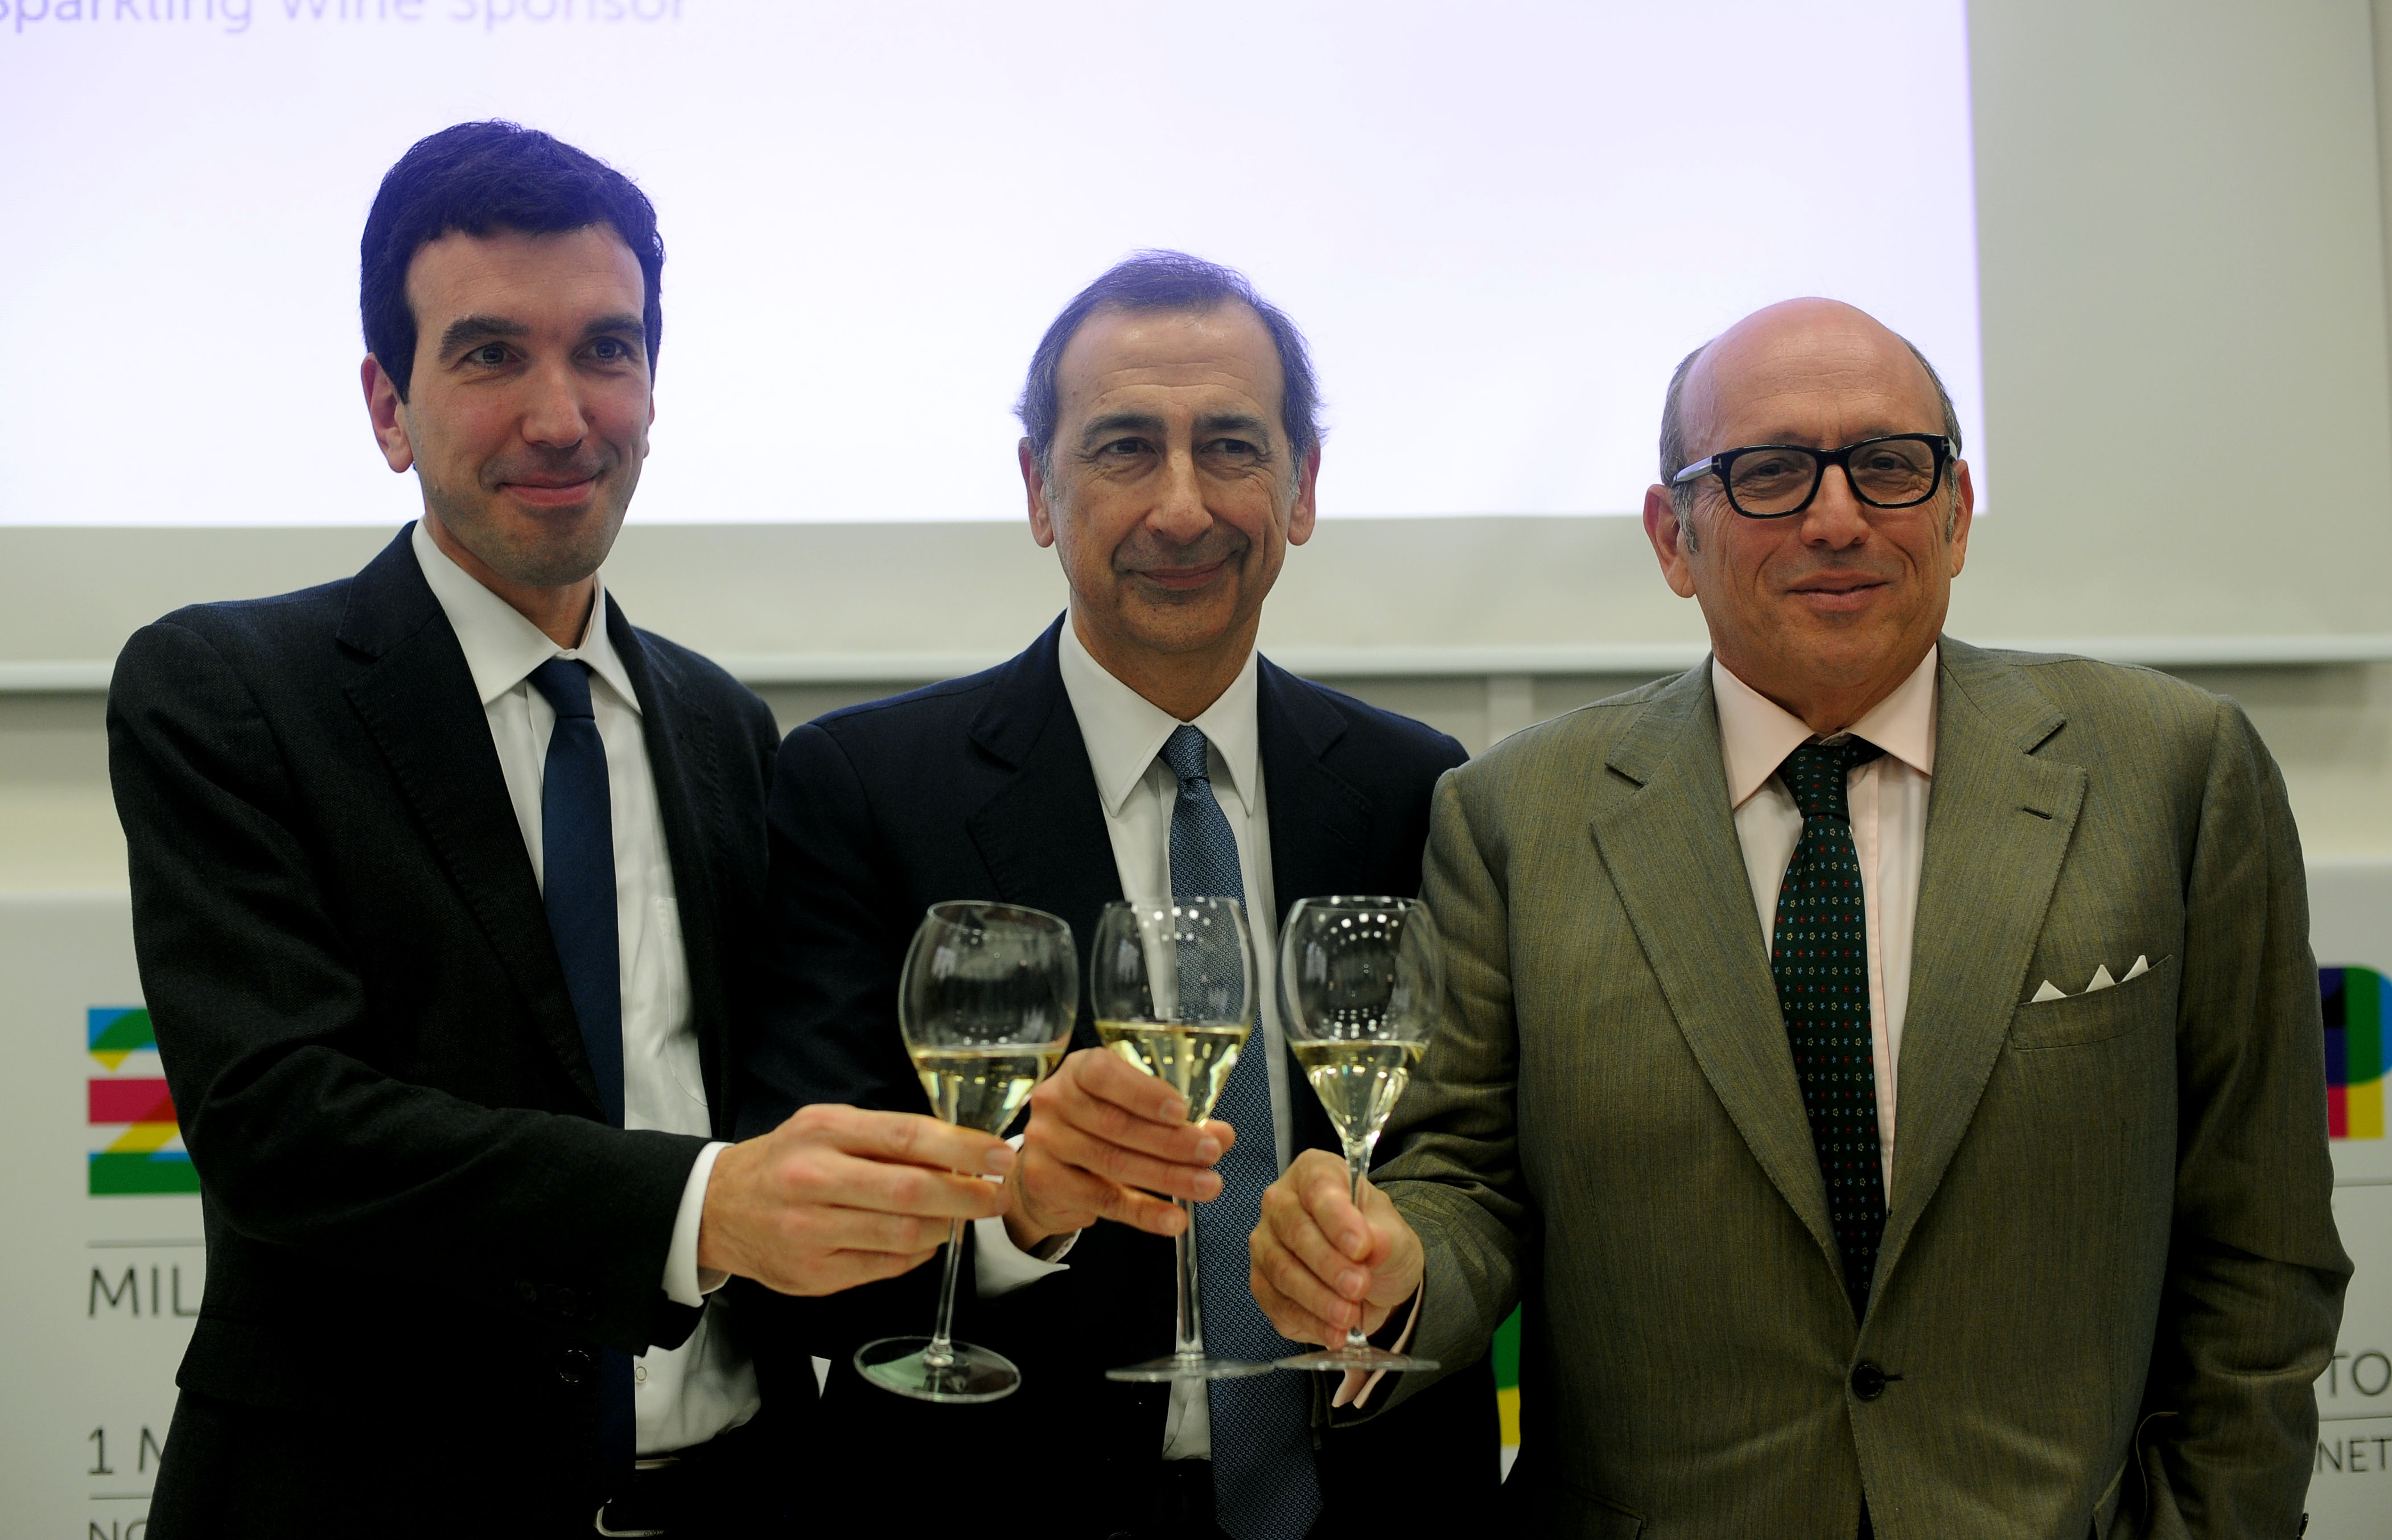  Franciacorta Official Sparkling Wine Expo Milano 2015